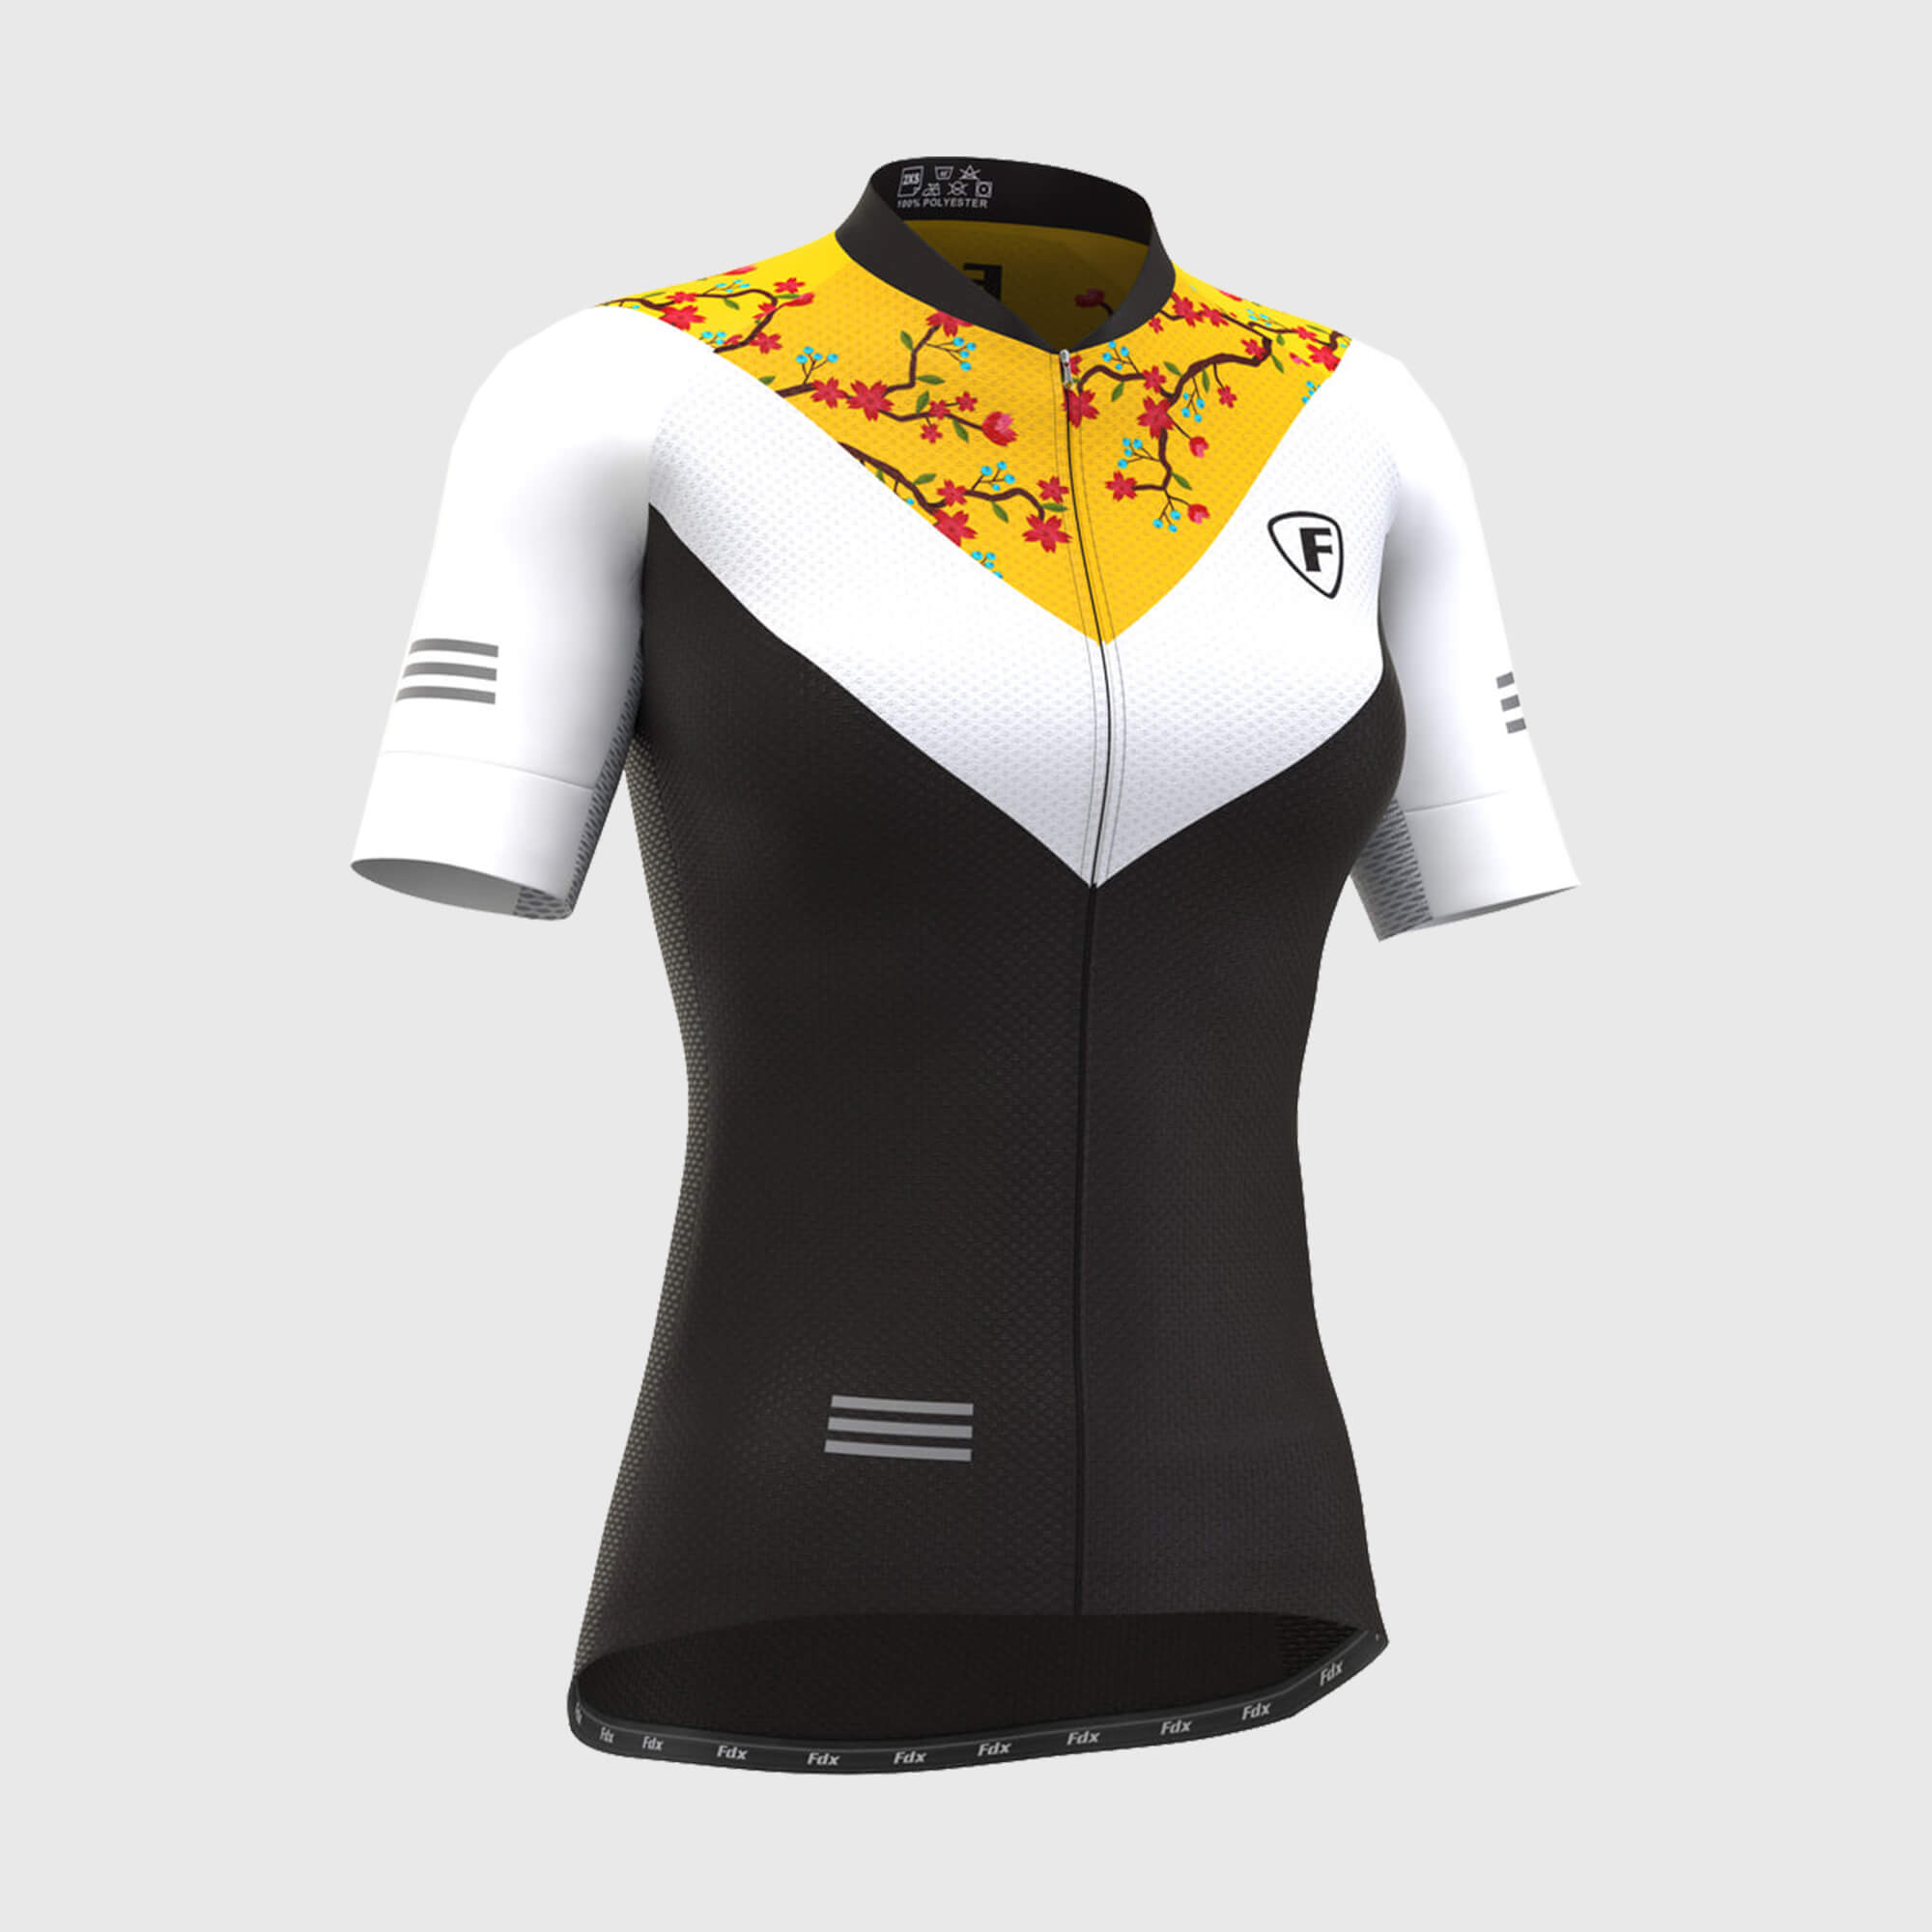 FDX Women's Black, White & Yellow Short Sleeve Best Cycling Jersey & Breathable Mesh Bib Short Reflective Details 3D Cushion Pad Lightweight 